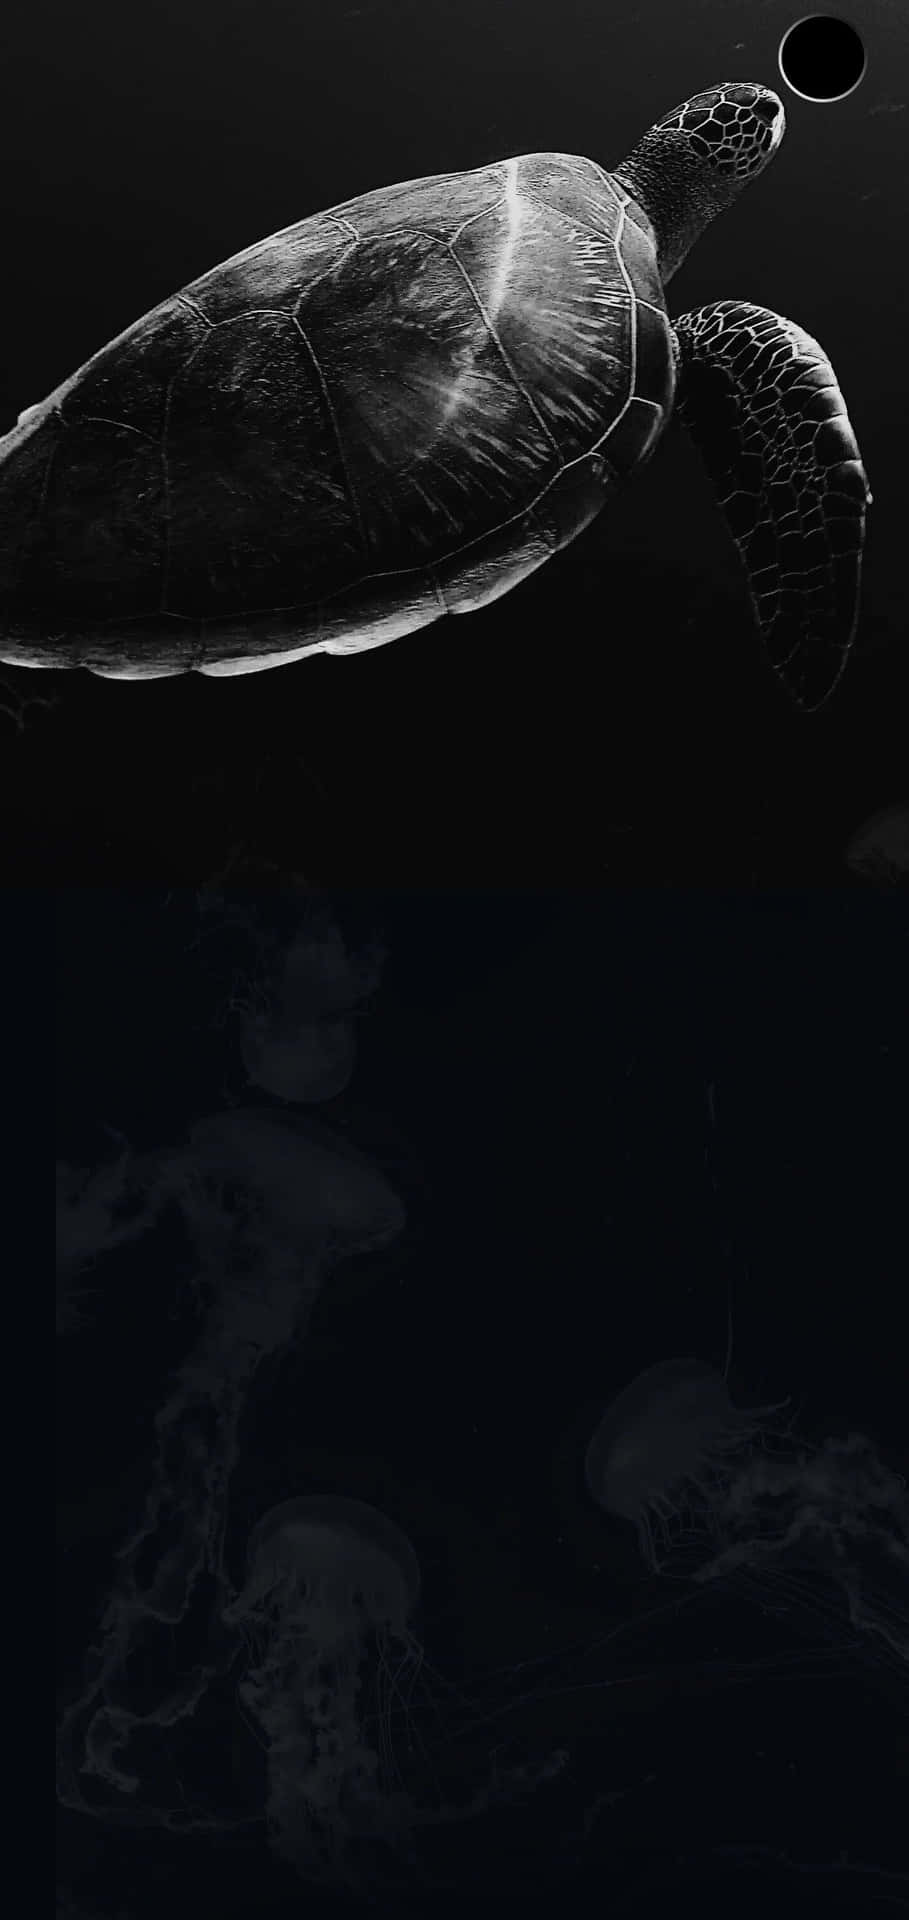 Unafoto In Bianco E Nero Di Una Tartaruga E Una Medusa